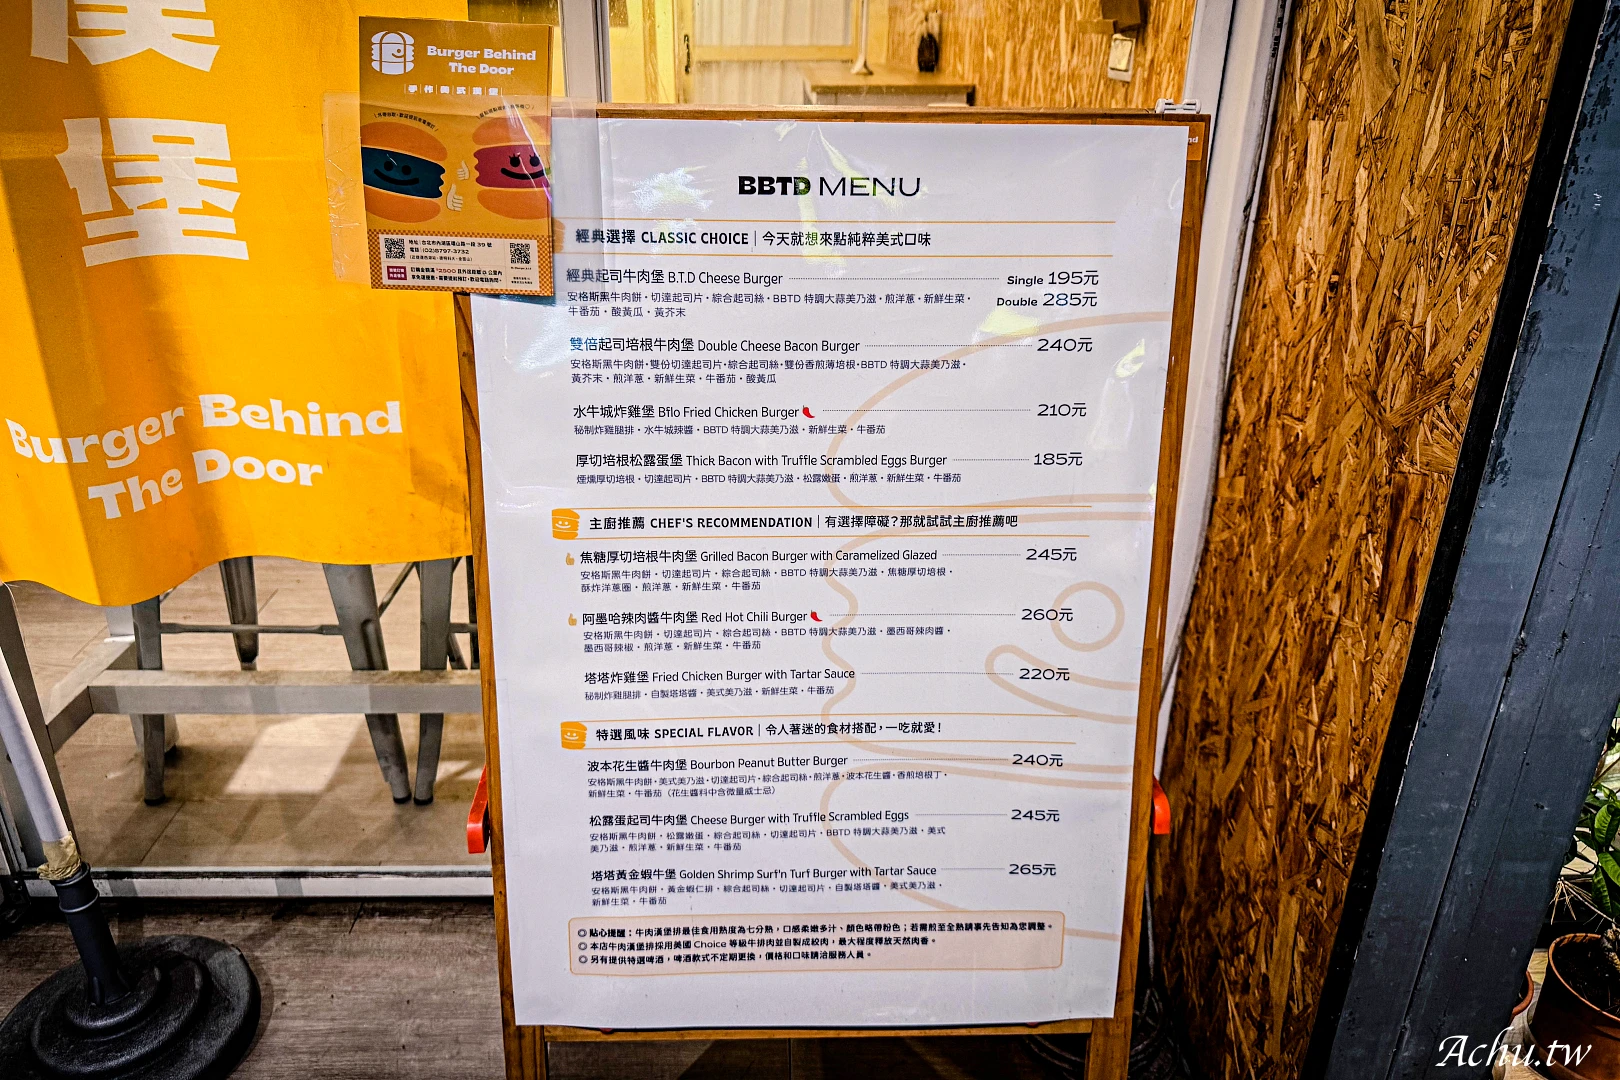 Burger Behind The Door menu